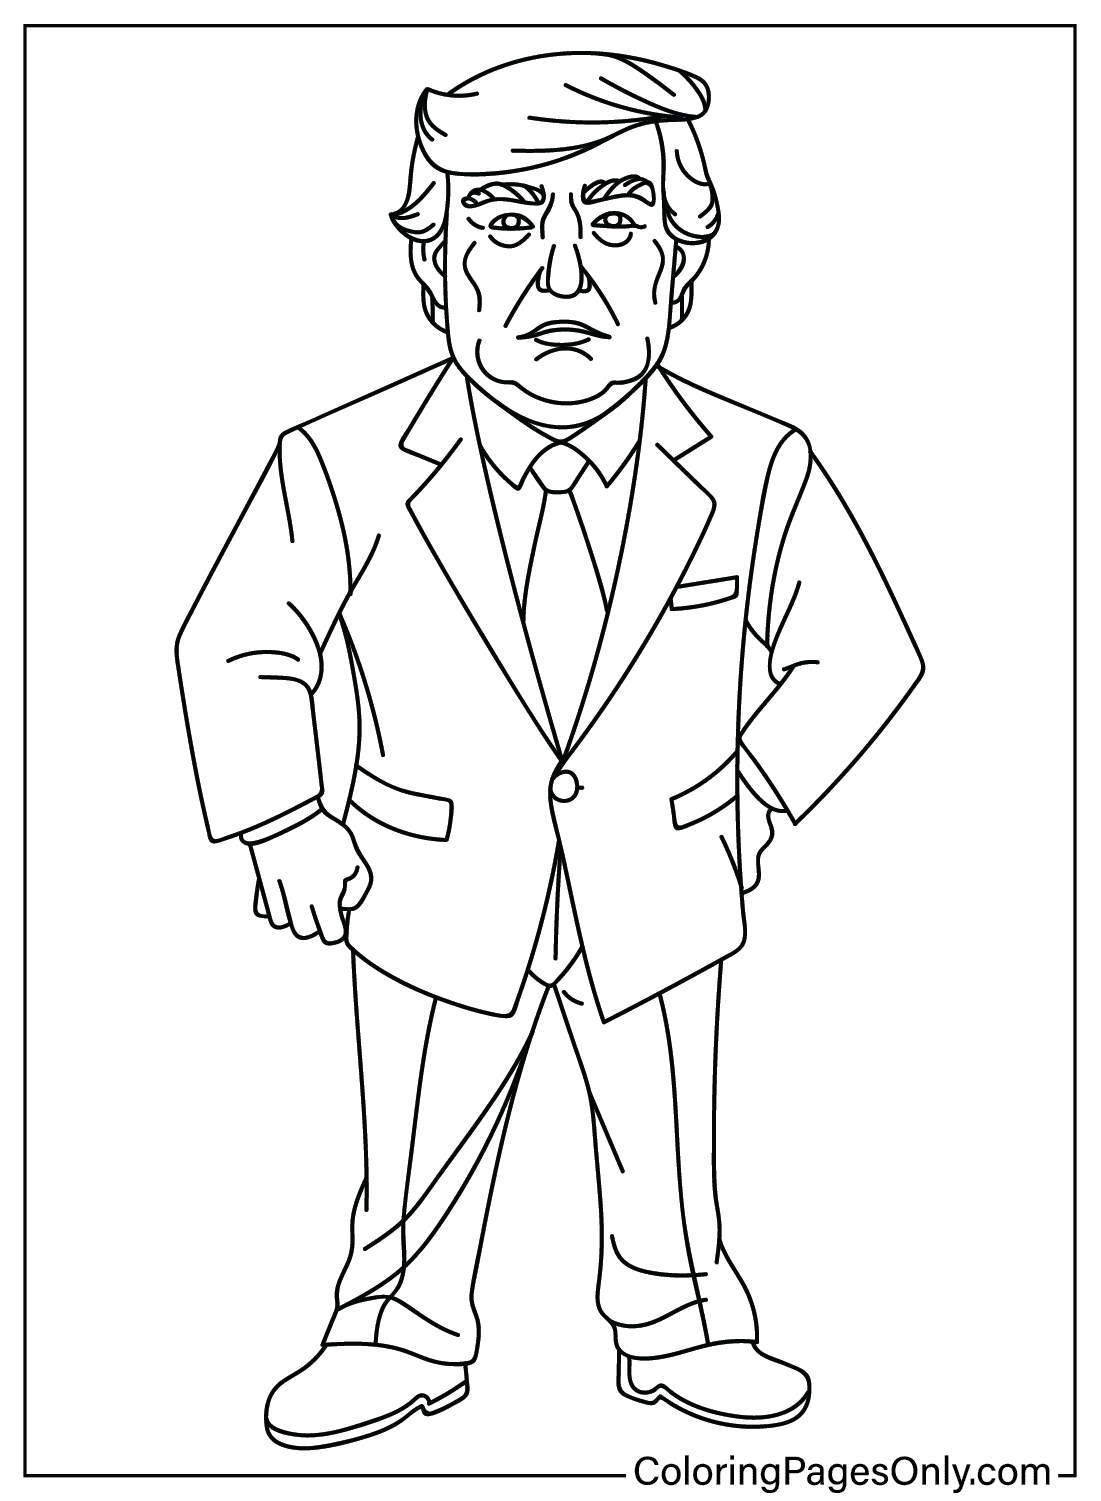 Dibujos para colorear de Donald Trump para imprimir de Donald Trump